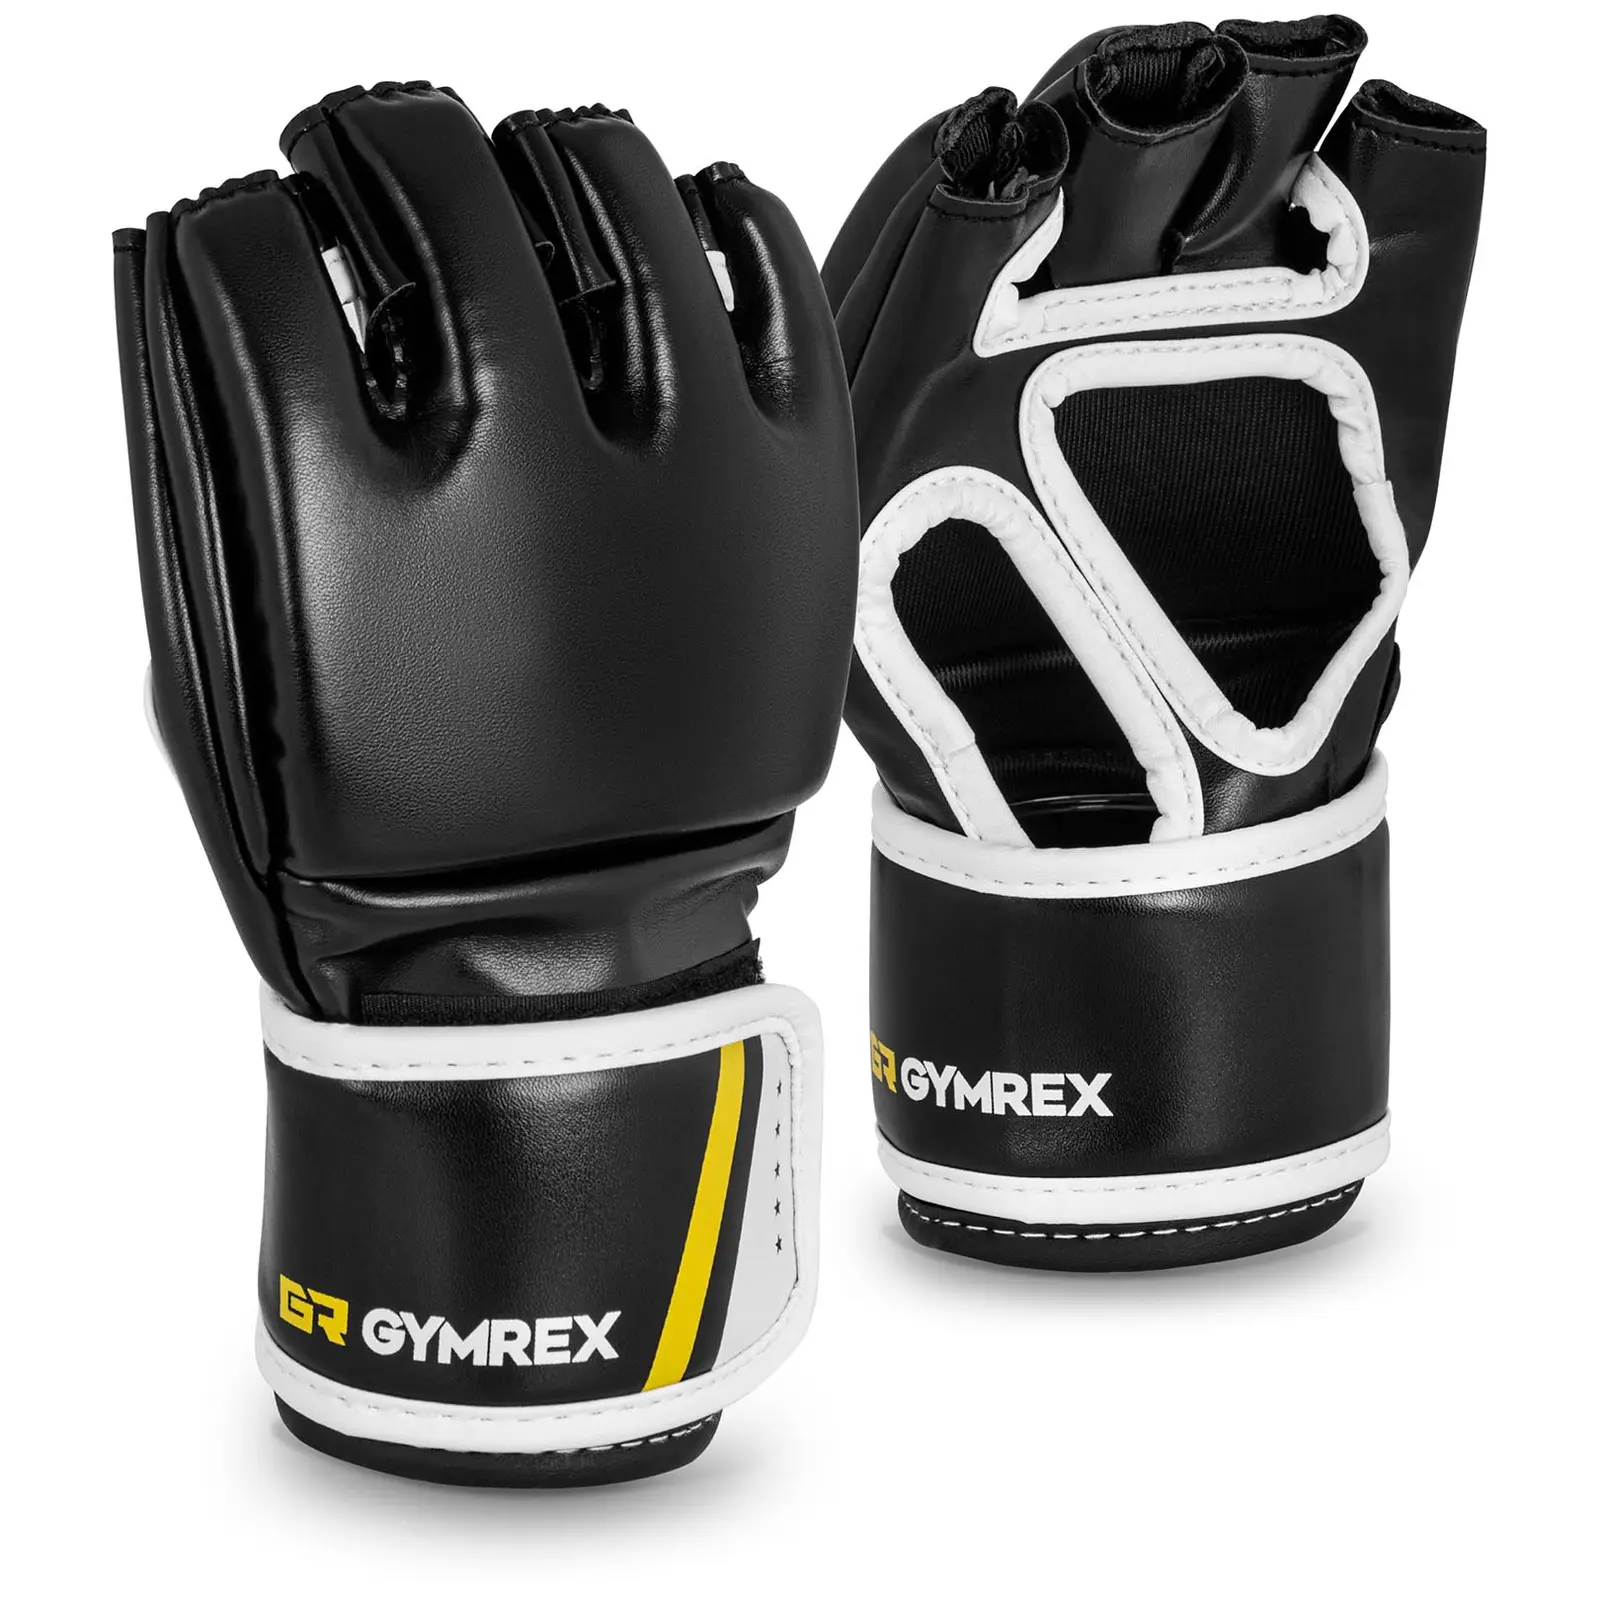 MMA-handskar - Stl. S/M - Svarta - Utan tummar